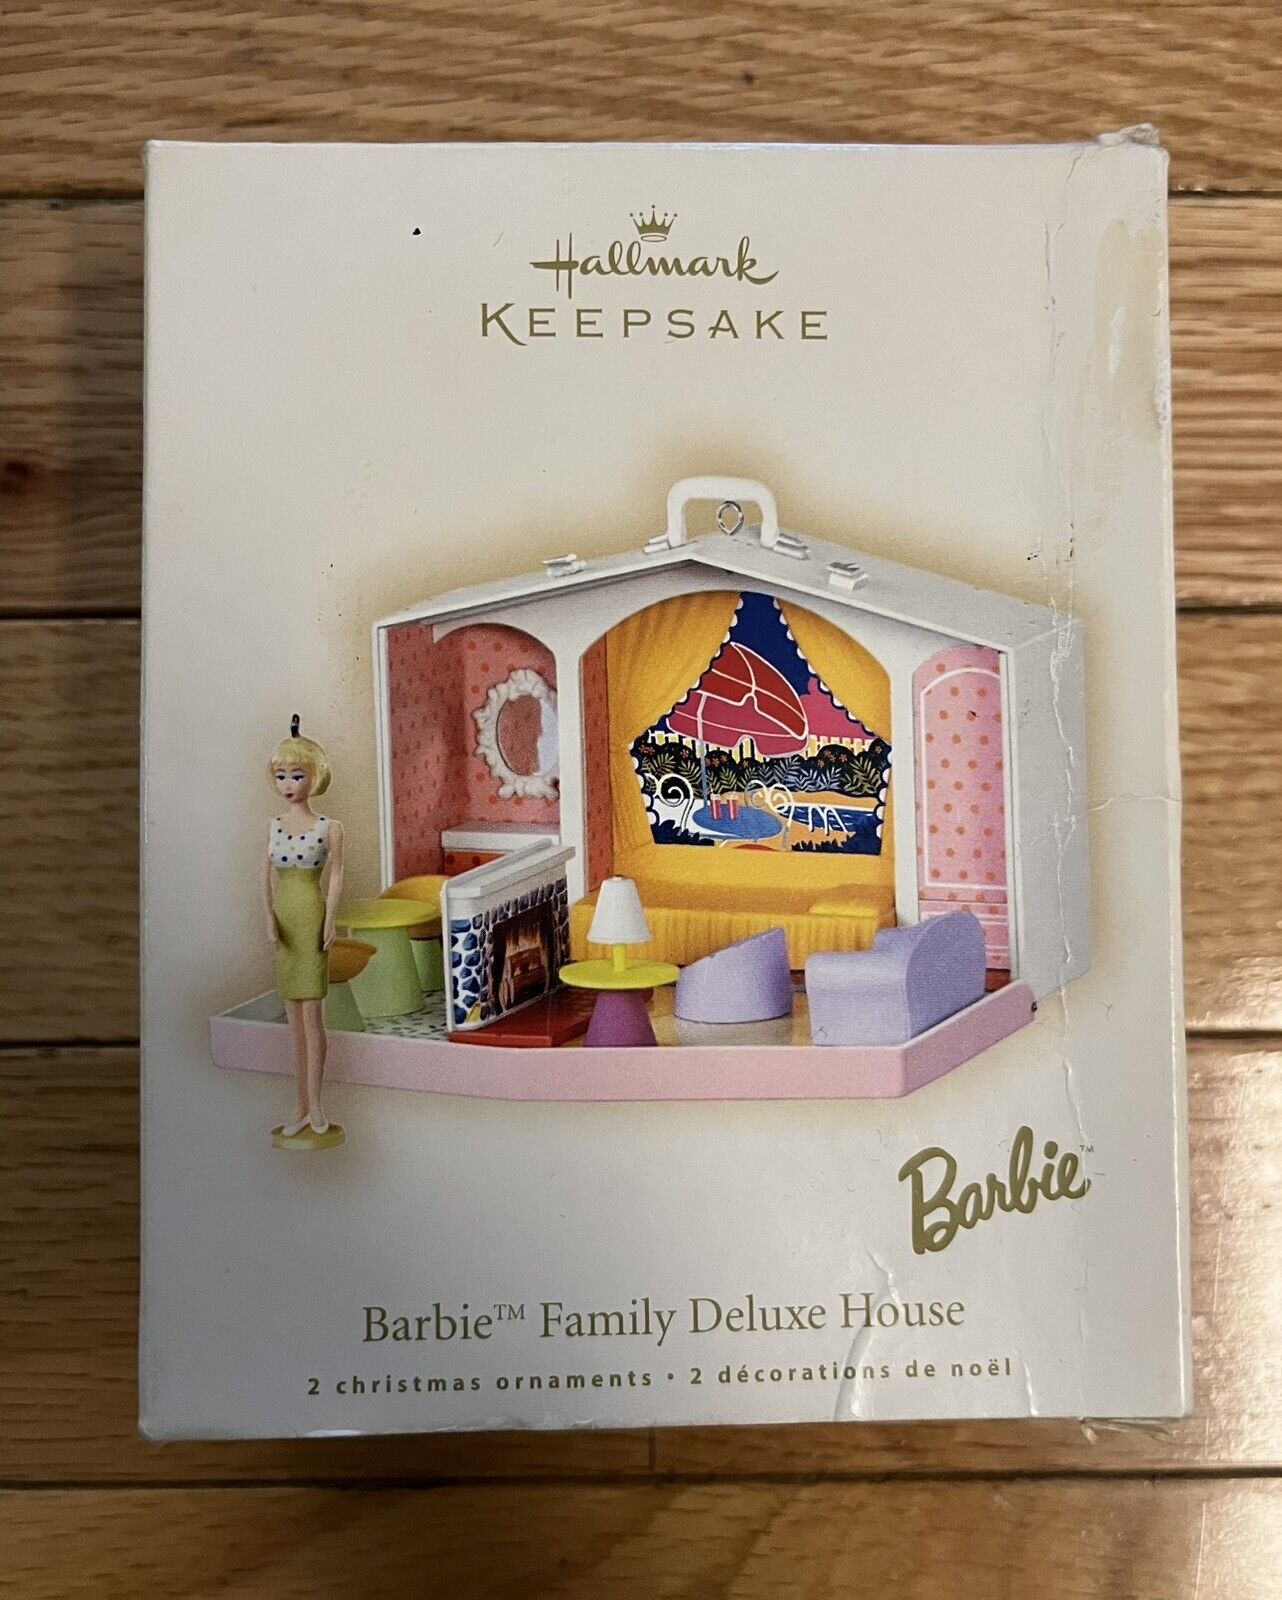 2007 Hallmark Keepsake Barbie Family Deluxe House Ornament